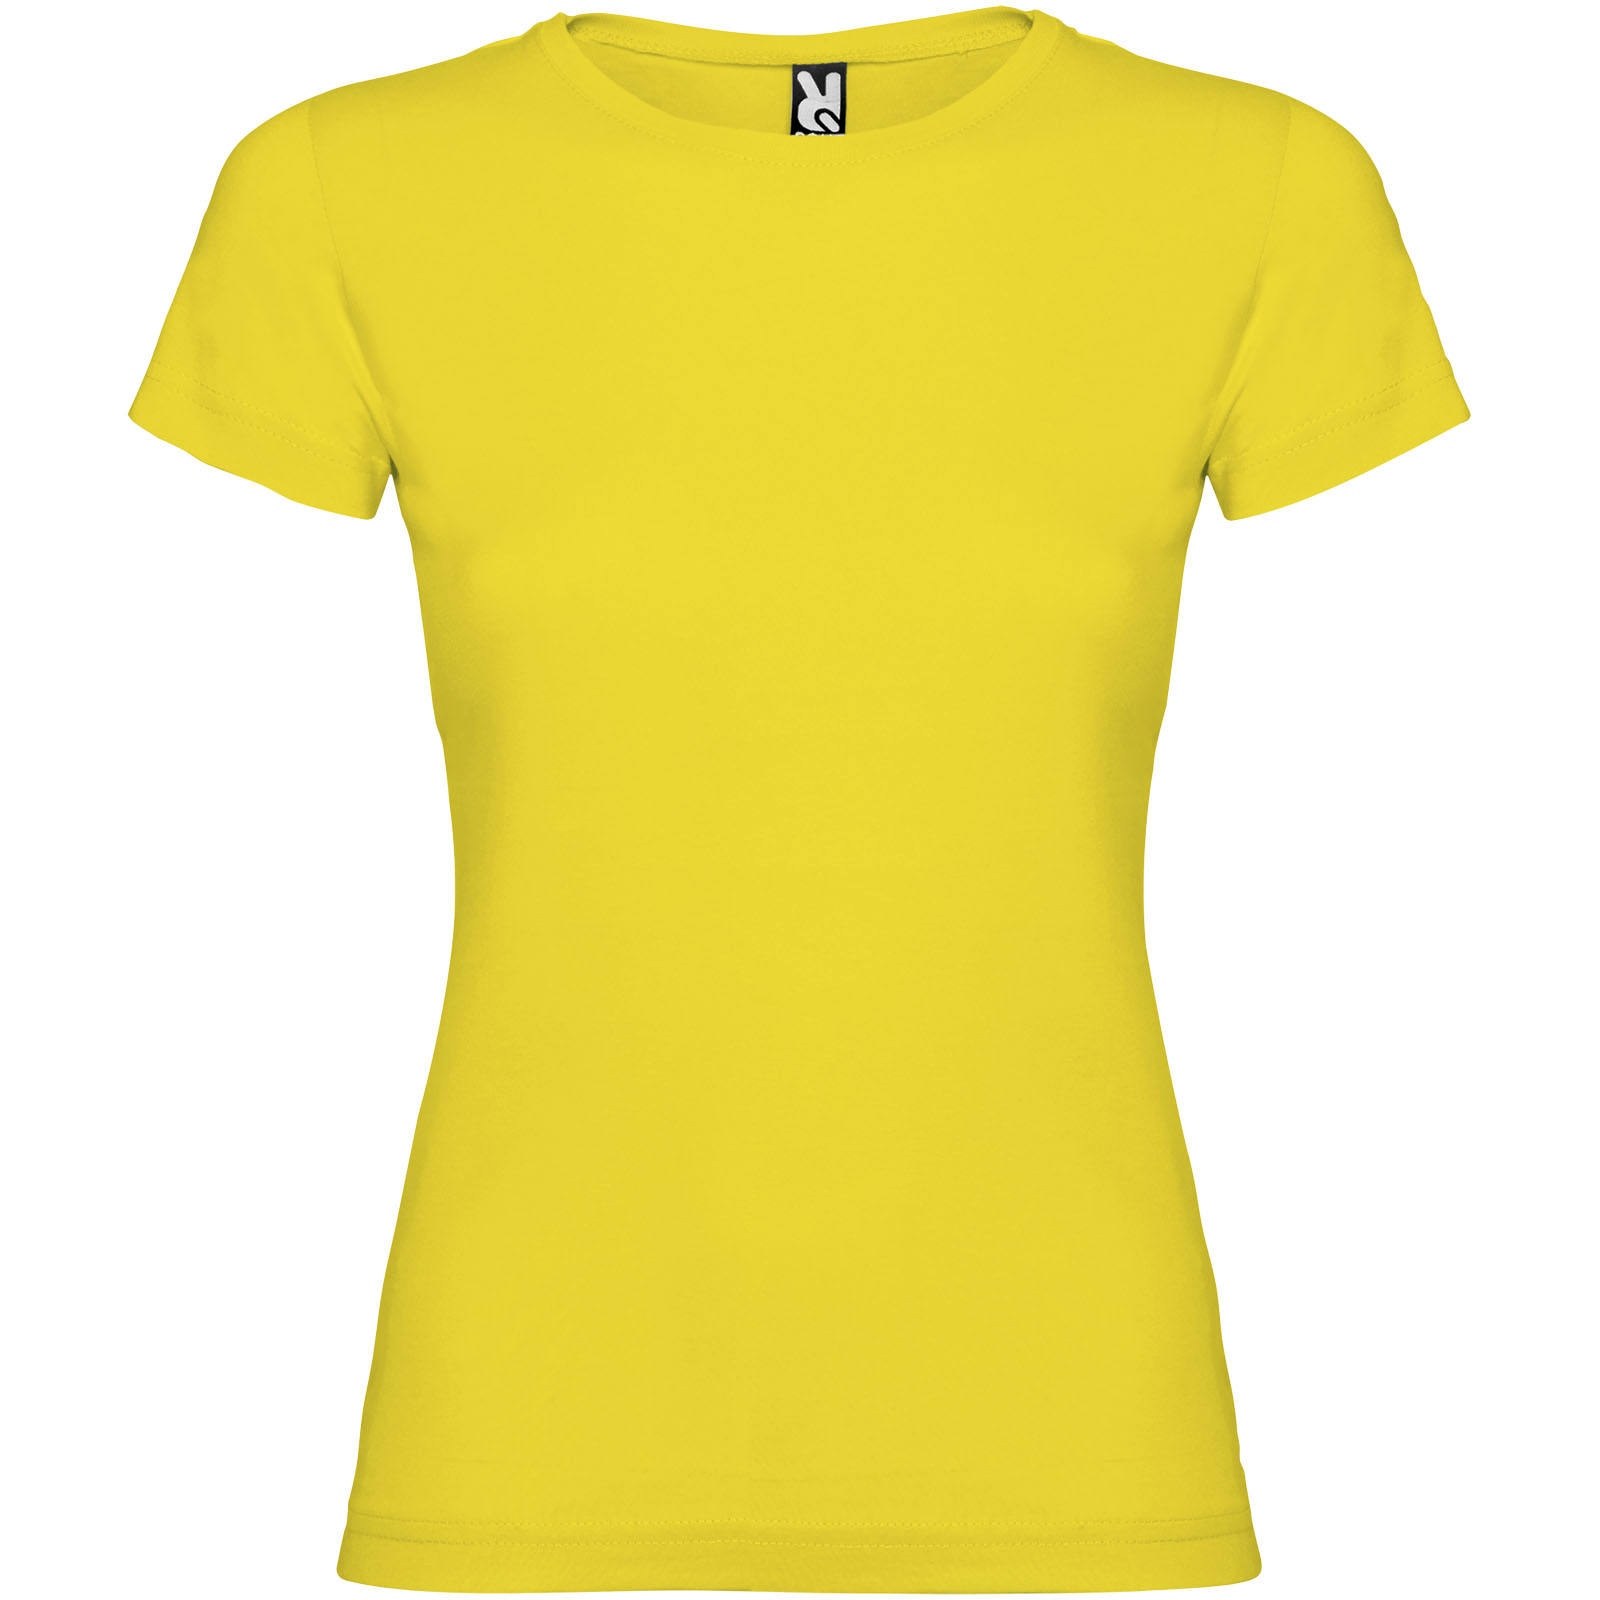 Advertising T-shirts - Jamaica short sleeve women's t-shirt - 0